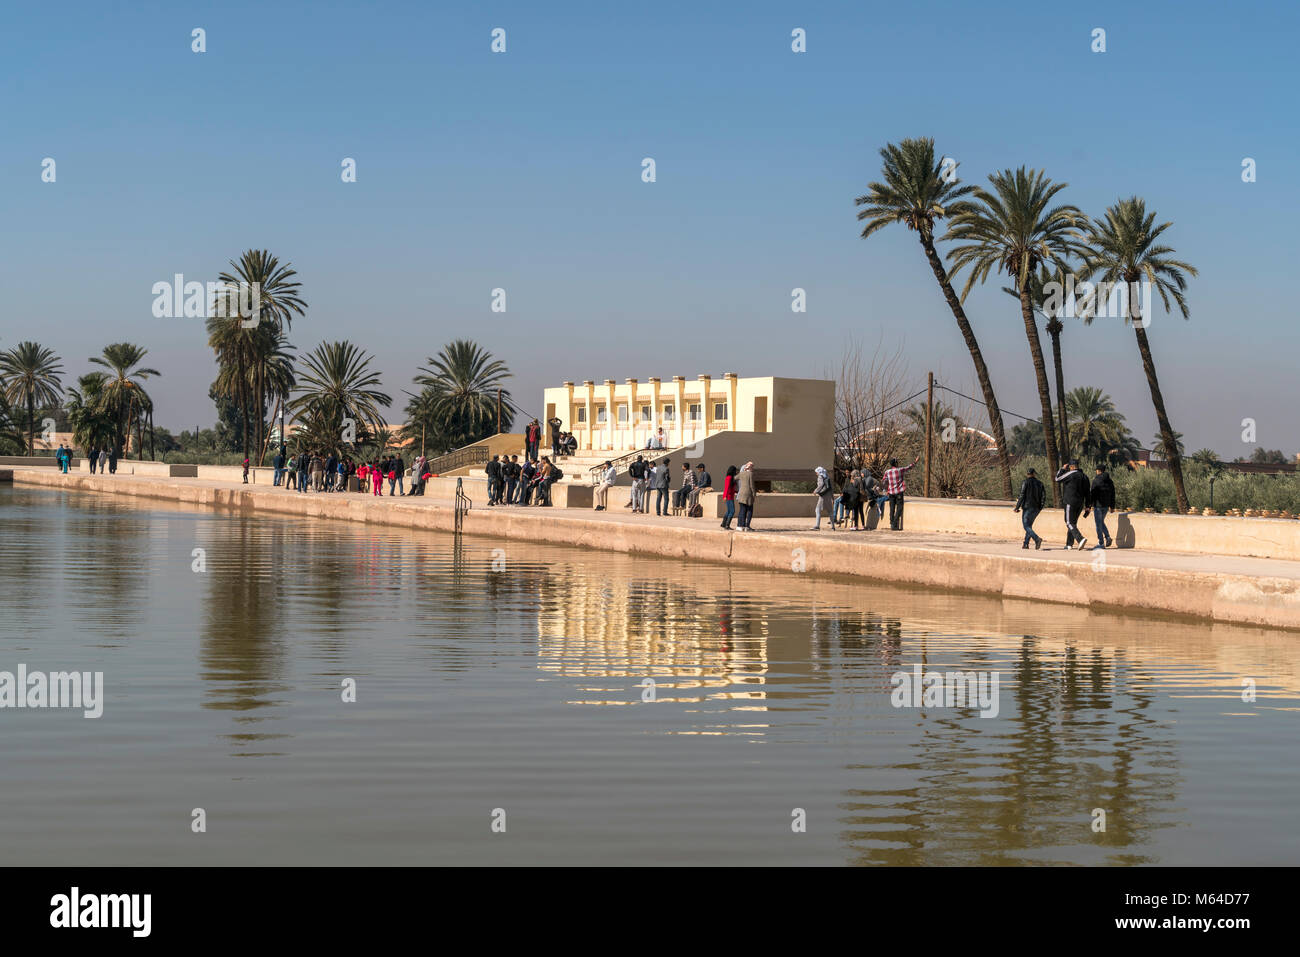 Menara-Garten Wasserbecken im Königreich Marokko, Marrakech, bassin d'eau, Afrika | des jardins de la Menara, Marrakech, Royaume du Maroc, l'Afrique Banque D'Images